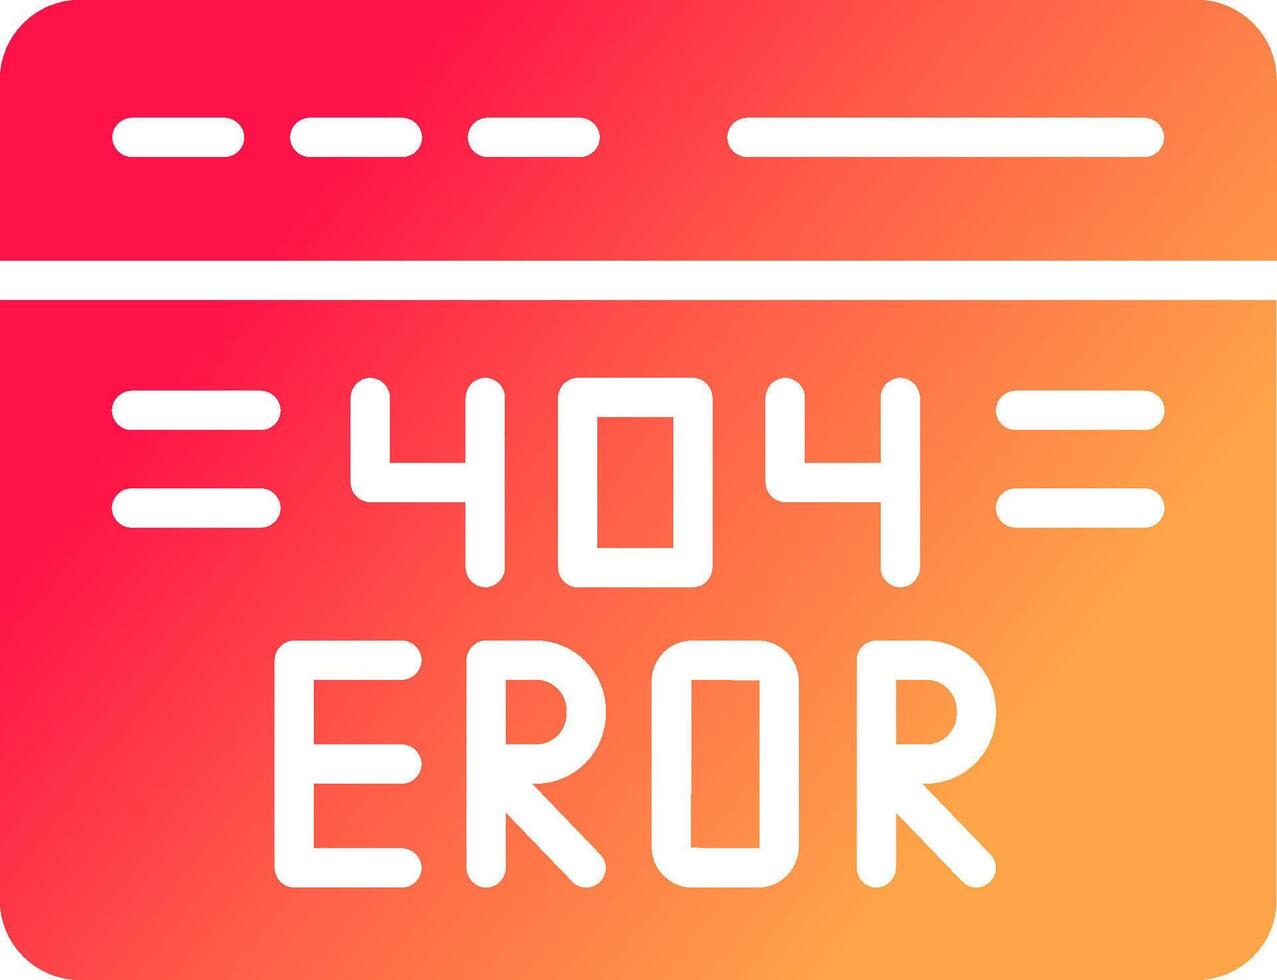 404 Error Creative Icon Design vector